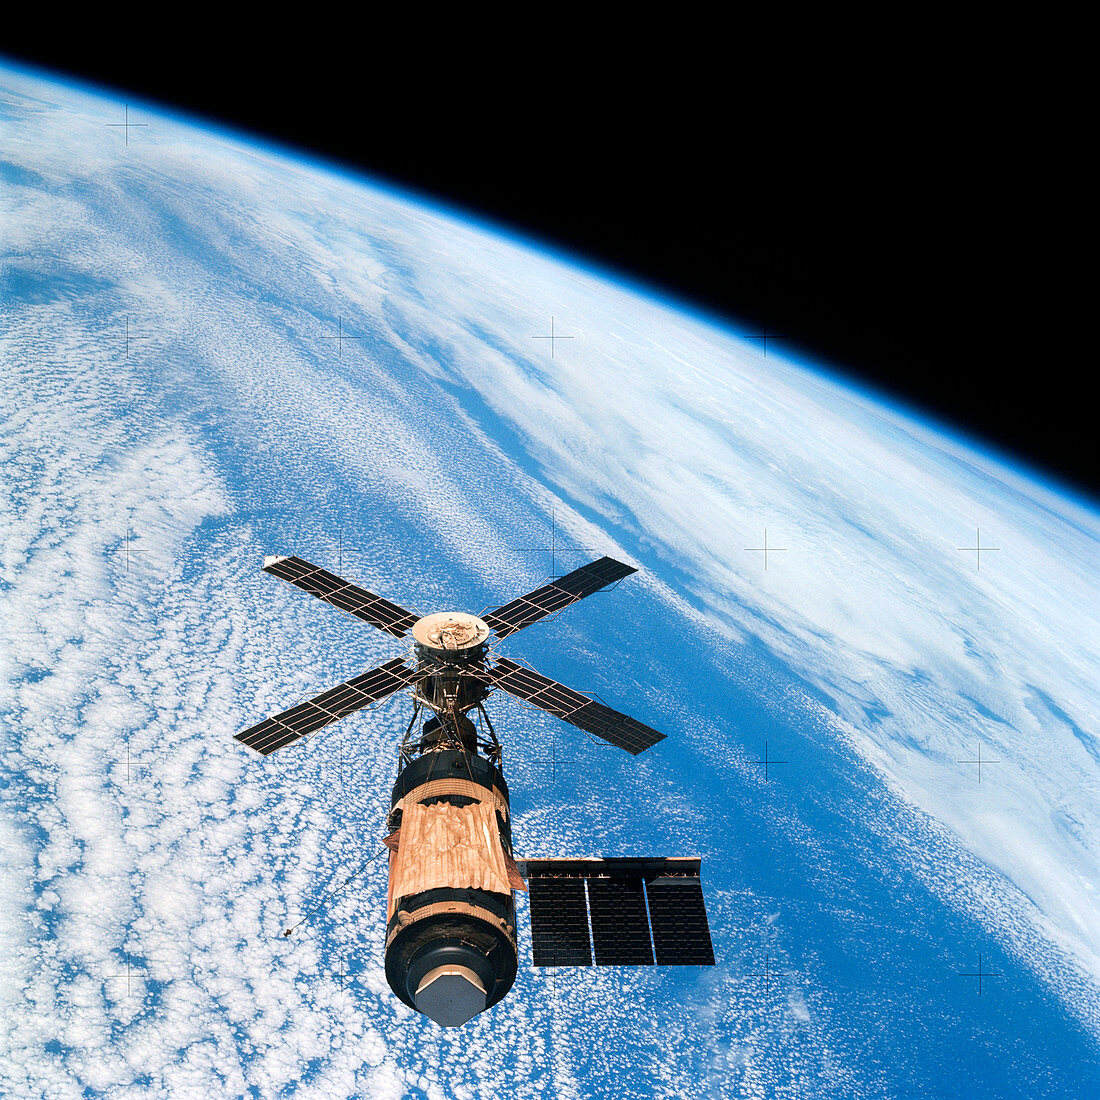 Skylab space station in orbit